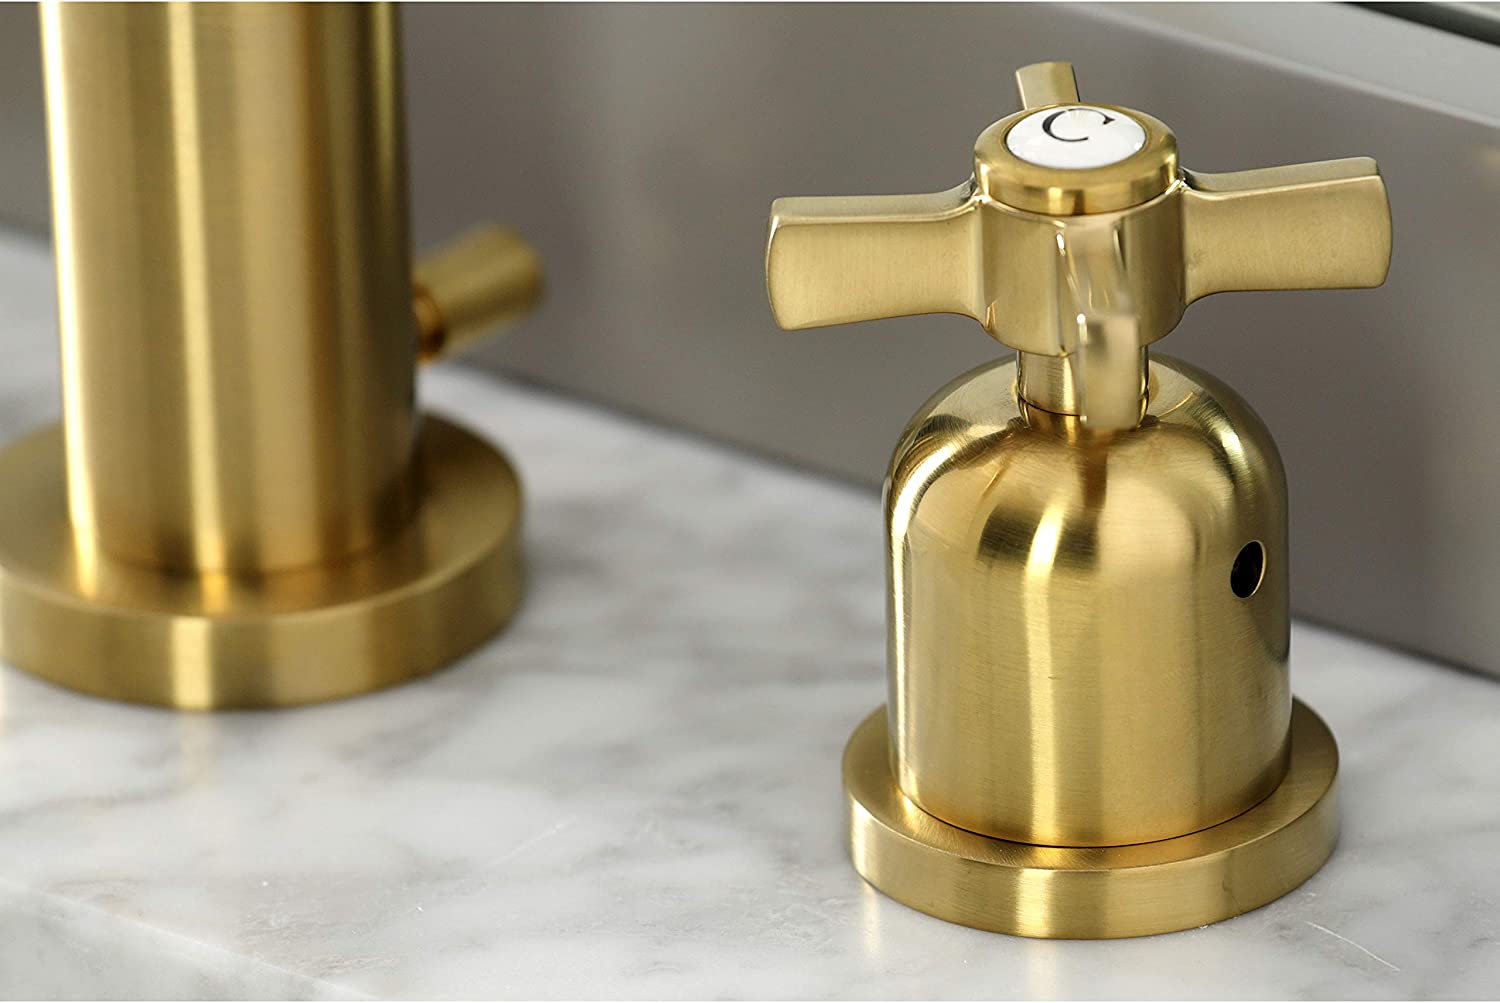 Fauceture FSC8923ZX Millennium Widespread Bathroom Faucet, Brushed Brass